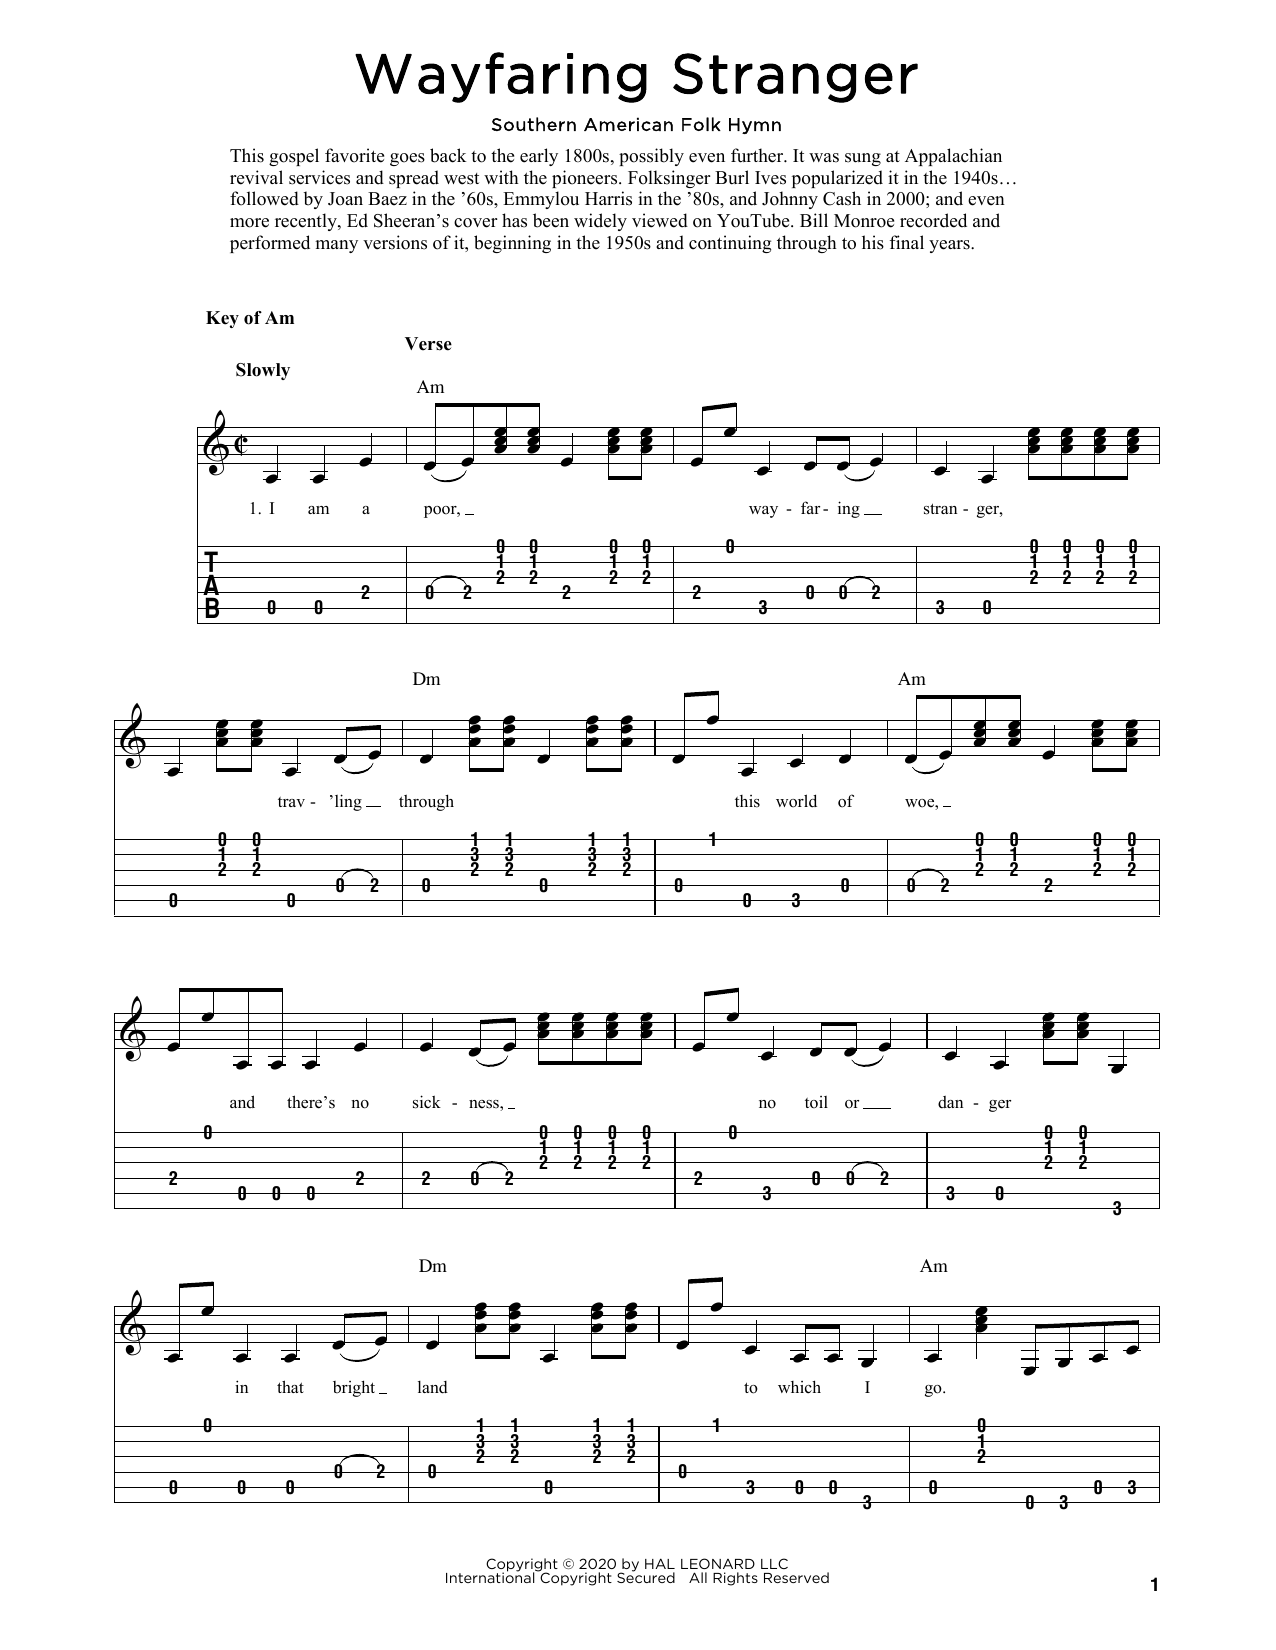 Southern American Folk Hymn Wayfaring Stranger (arr. Fred Sokolow) Sheet Music Notes & Chords for Solo Guitar Tab - Download or Print PDF